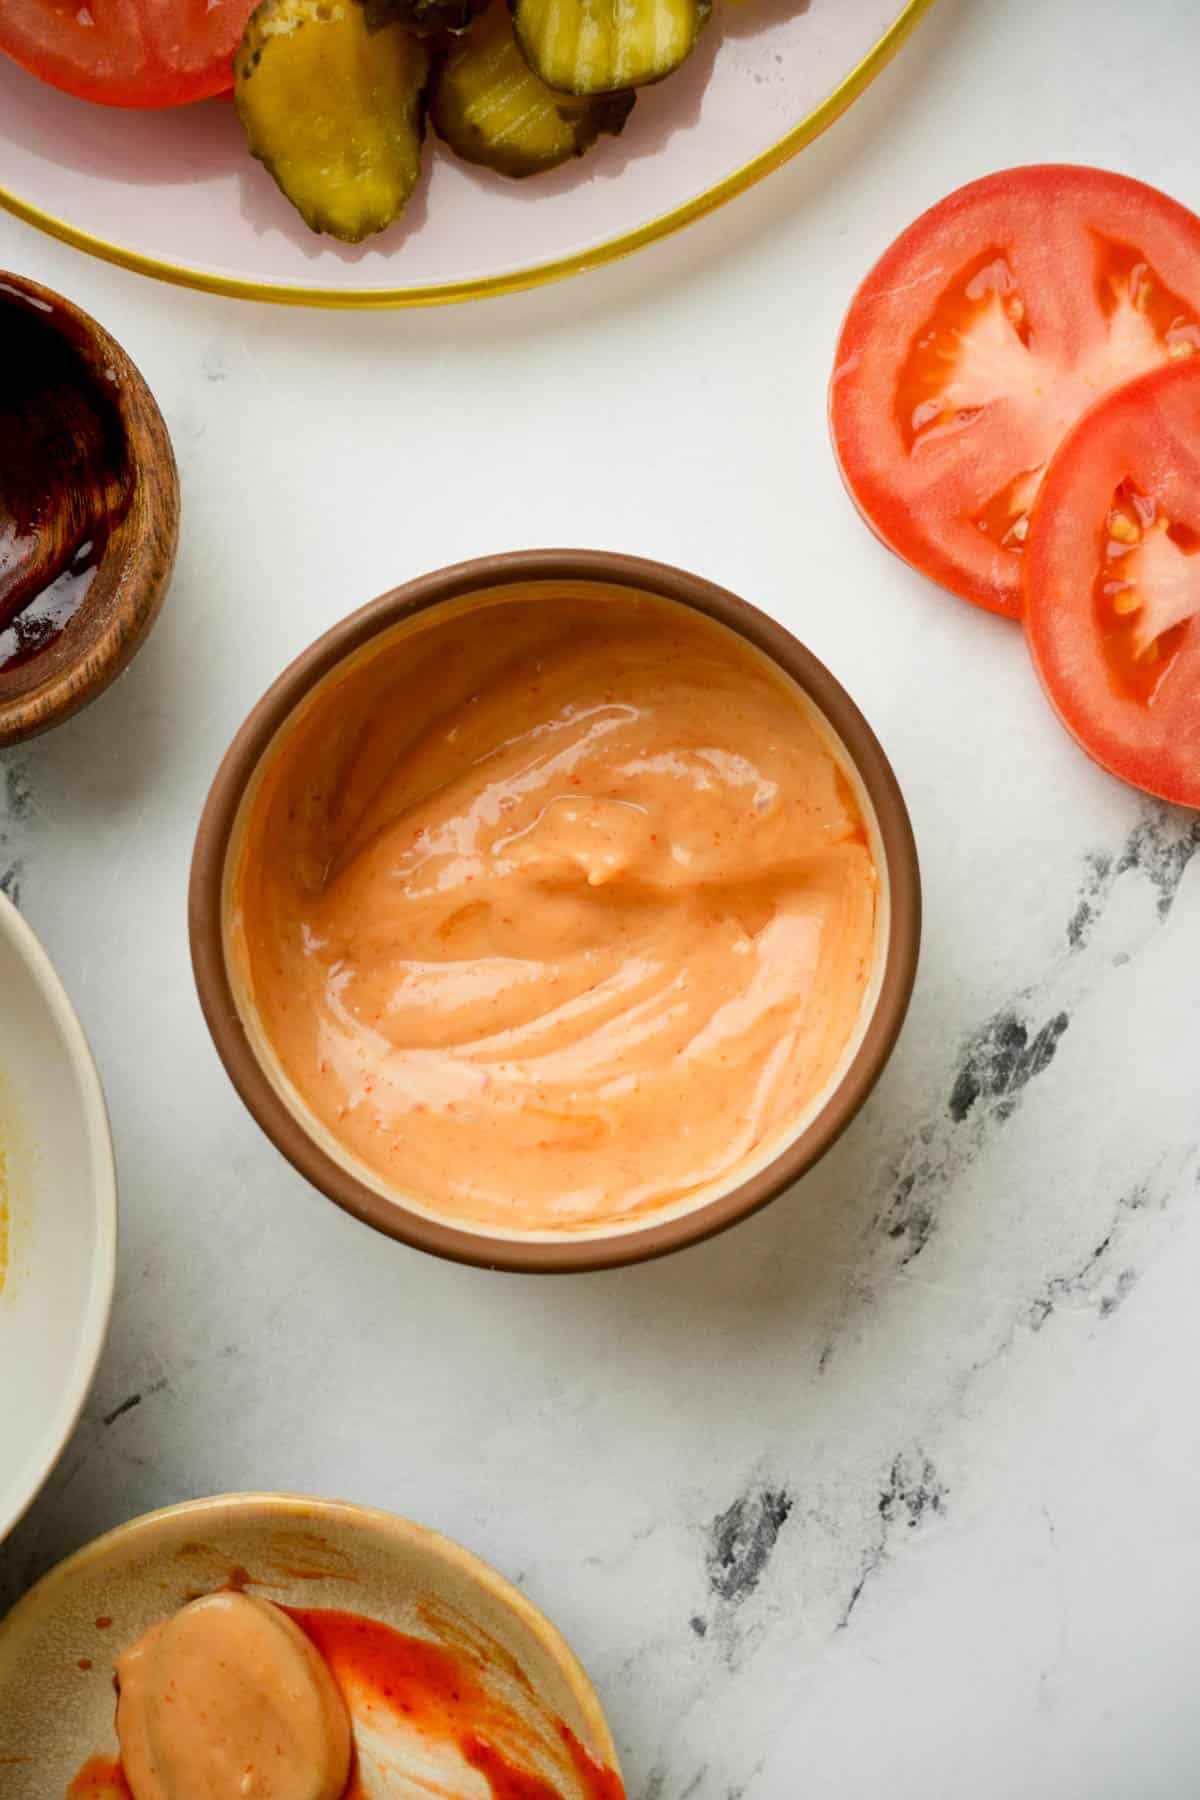 orange colored creamy sauce in a bowl